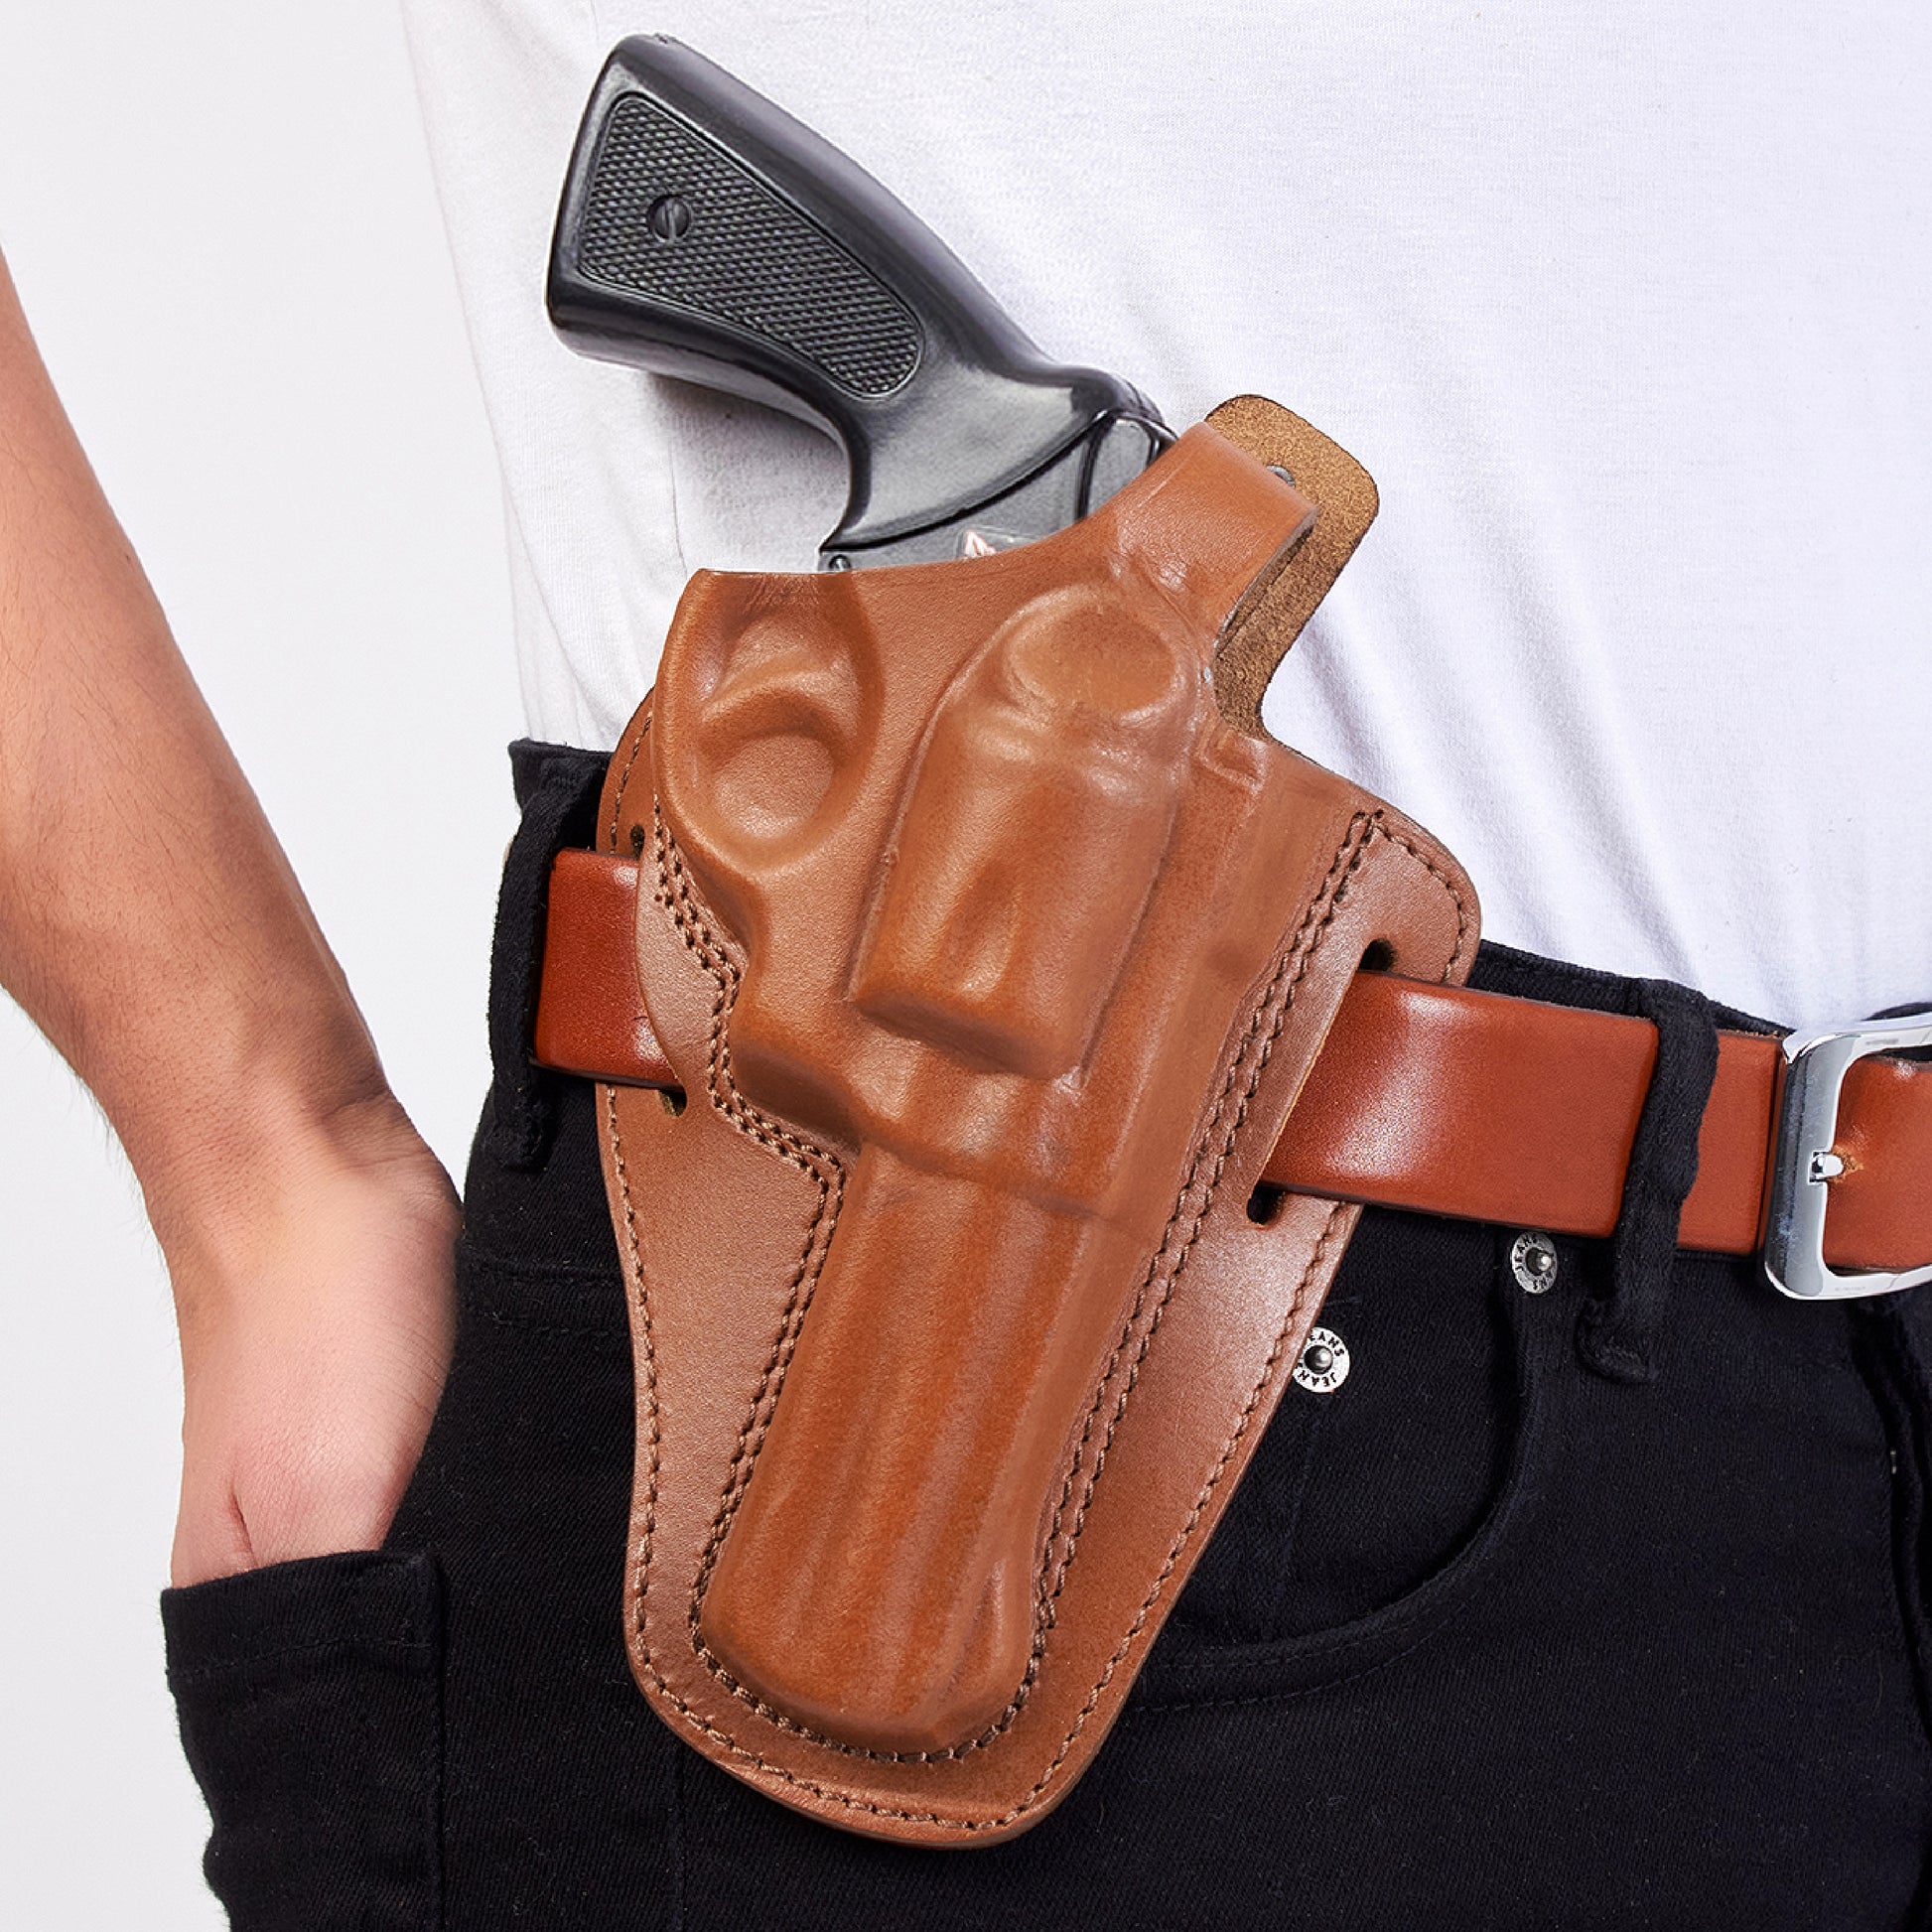 Vertical Shoulder Holster Genuine Leather Right Hand Gun Holster